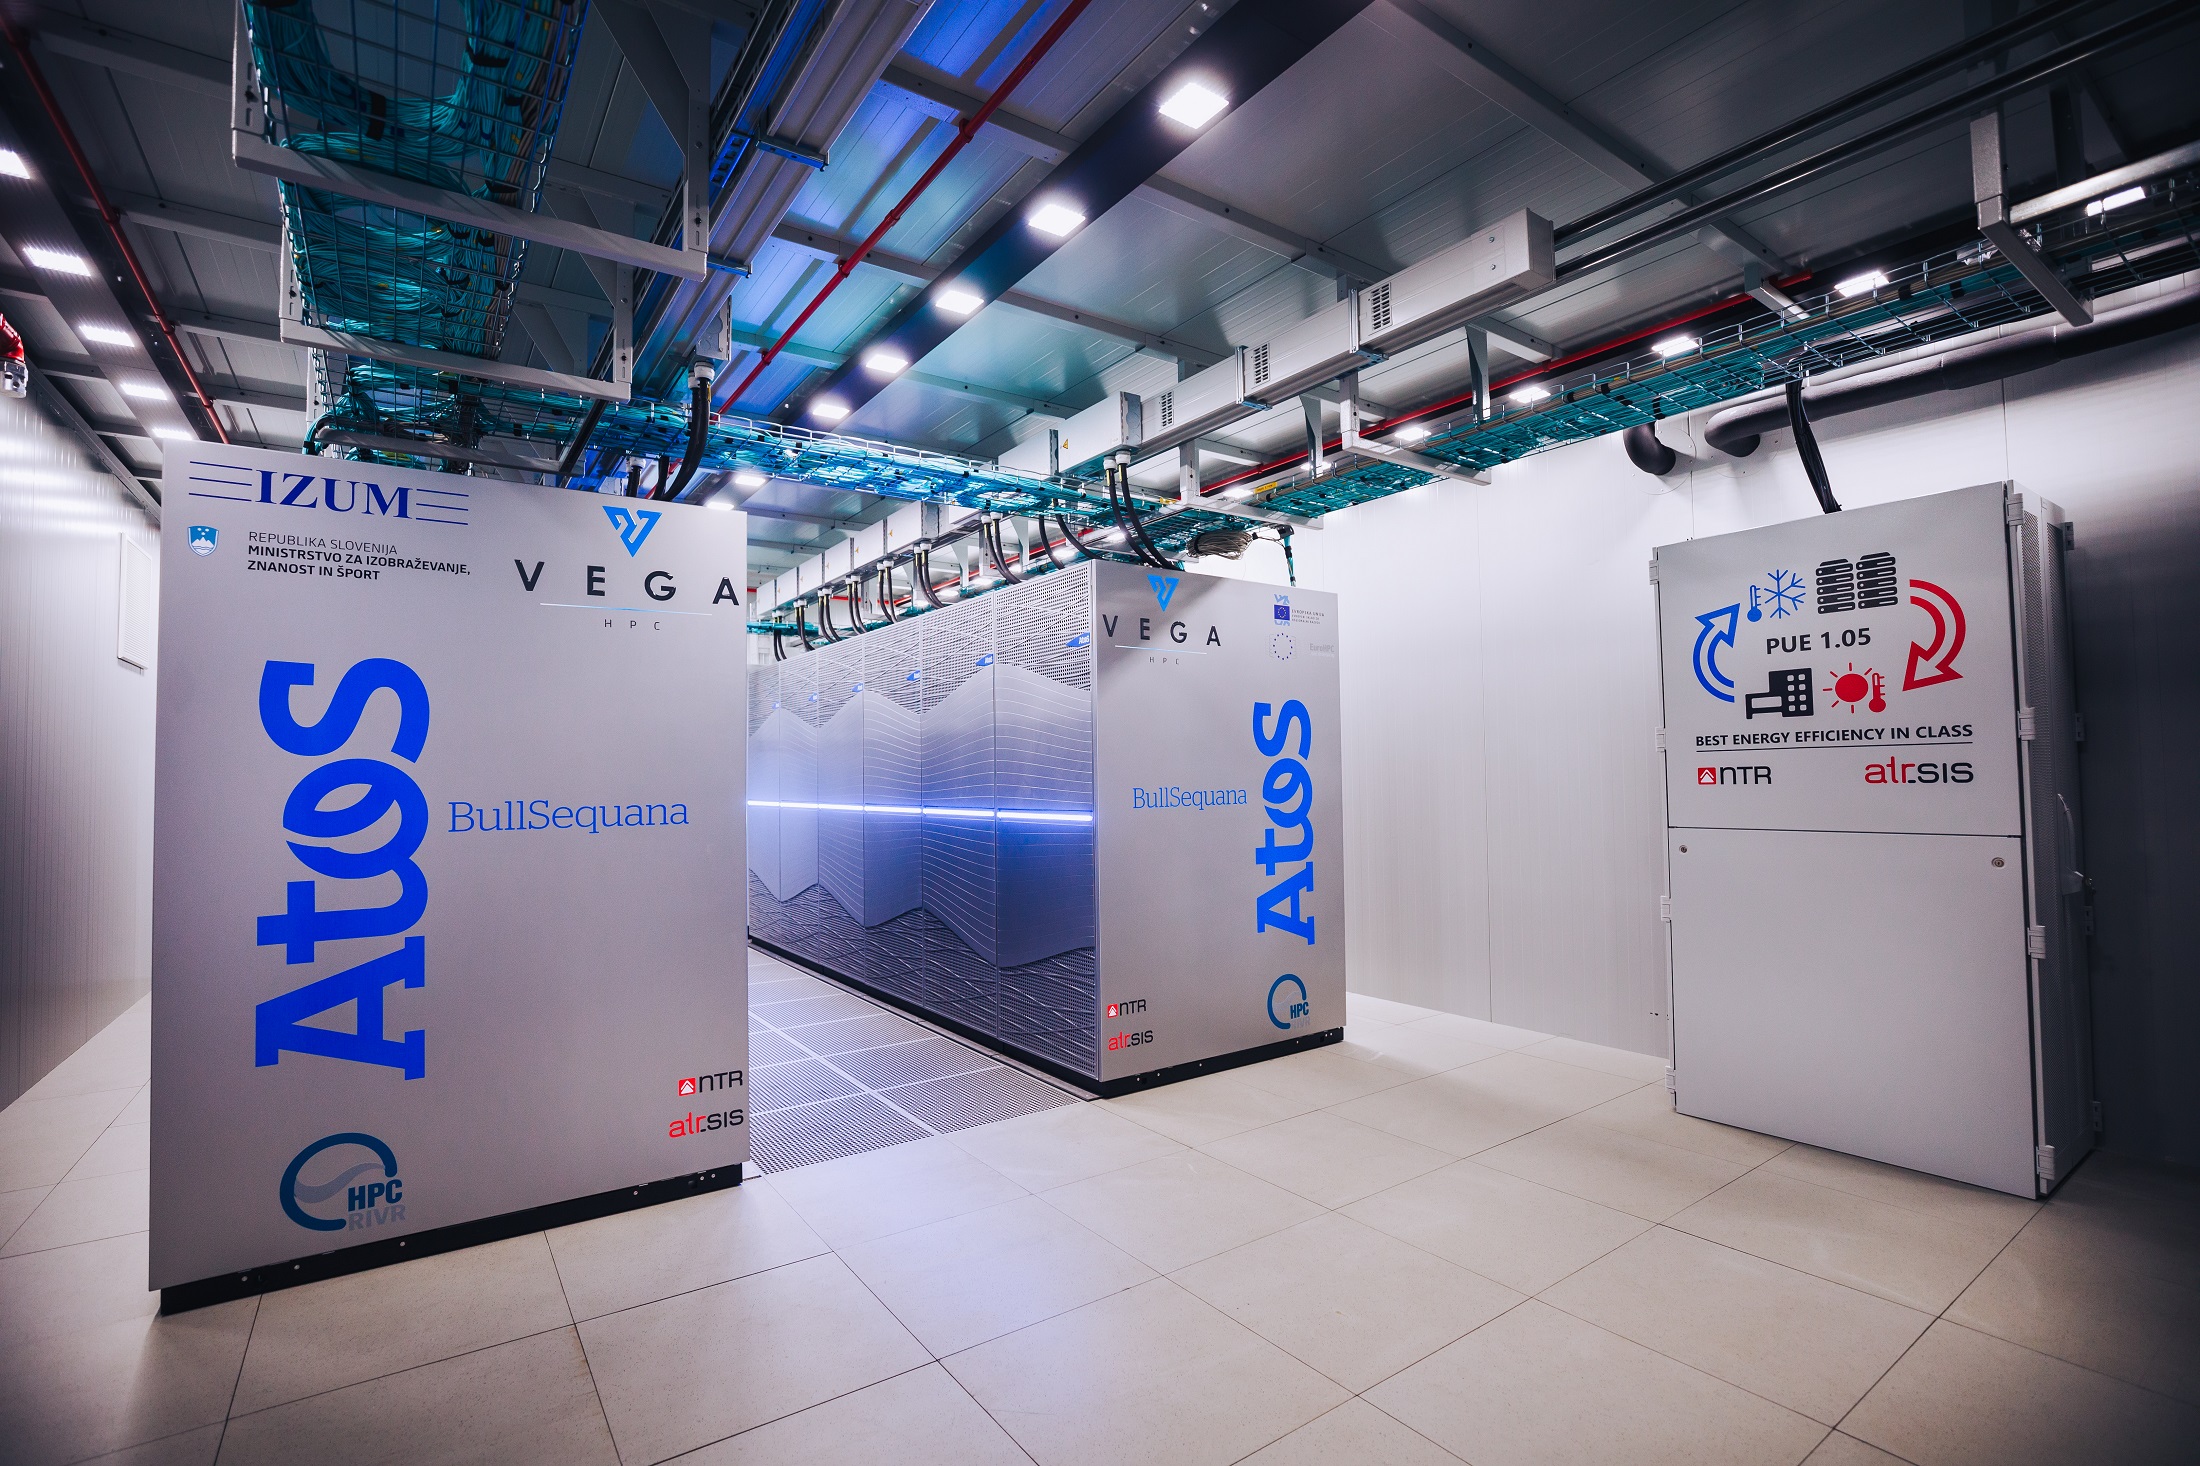 The first EuroHPC supercomputer Vega open for access